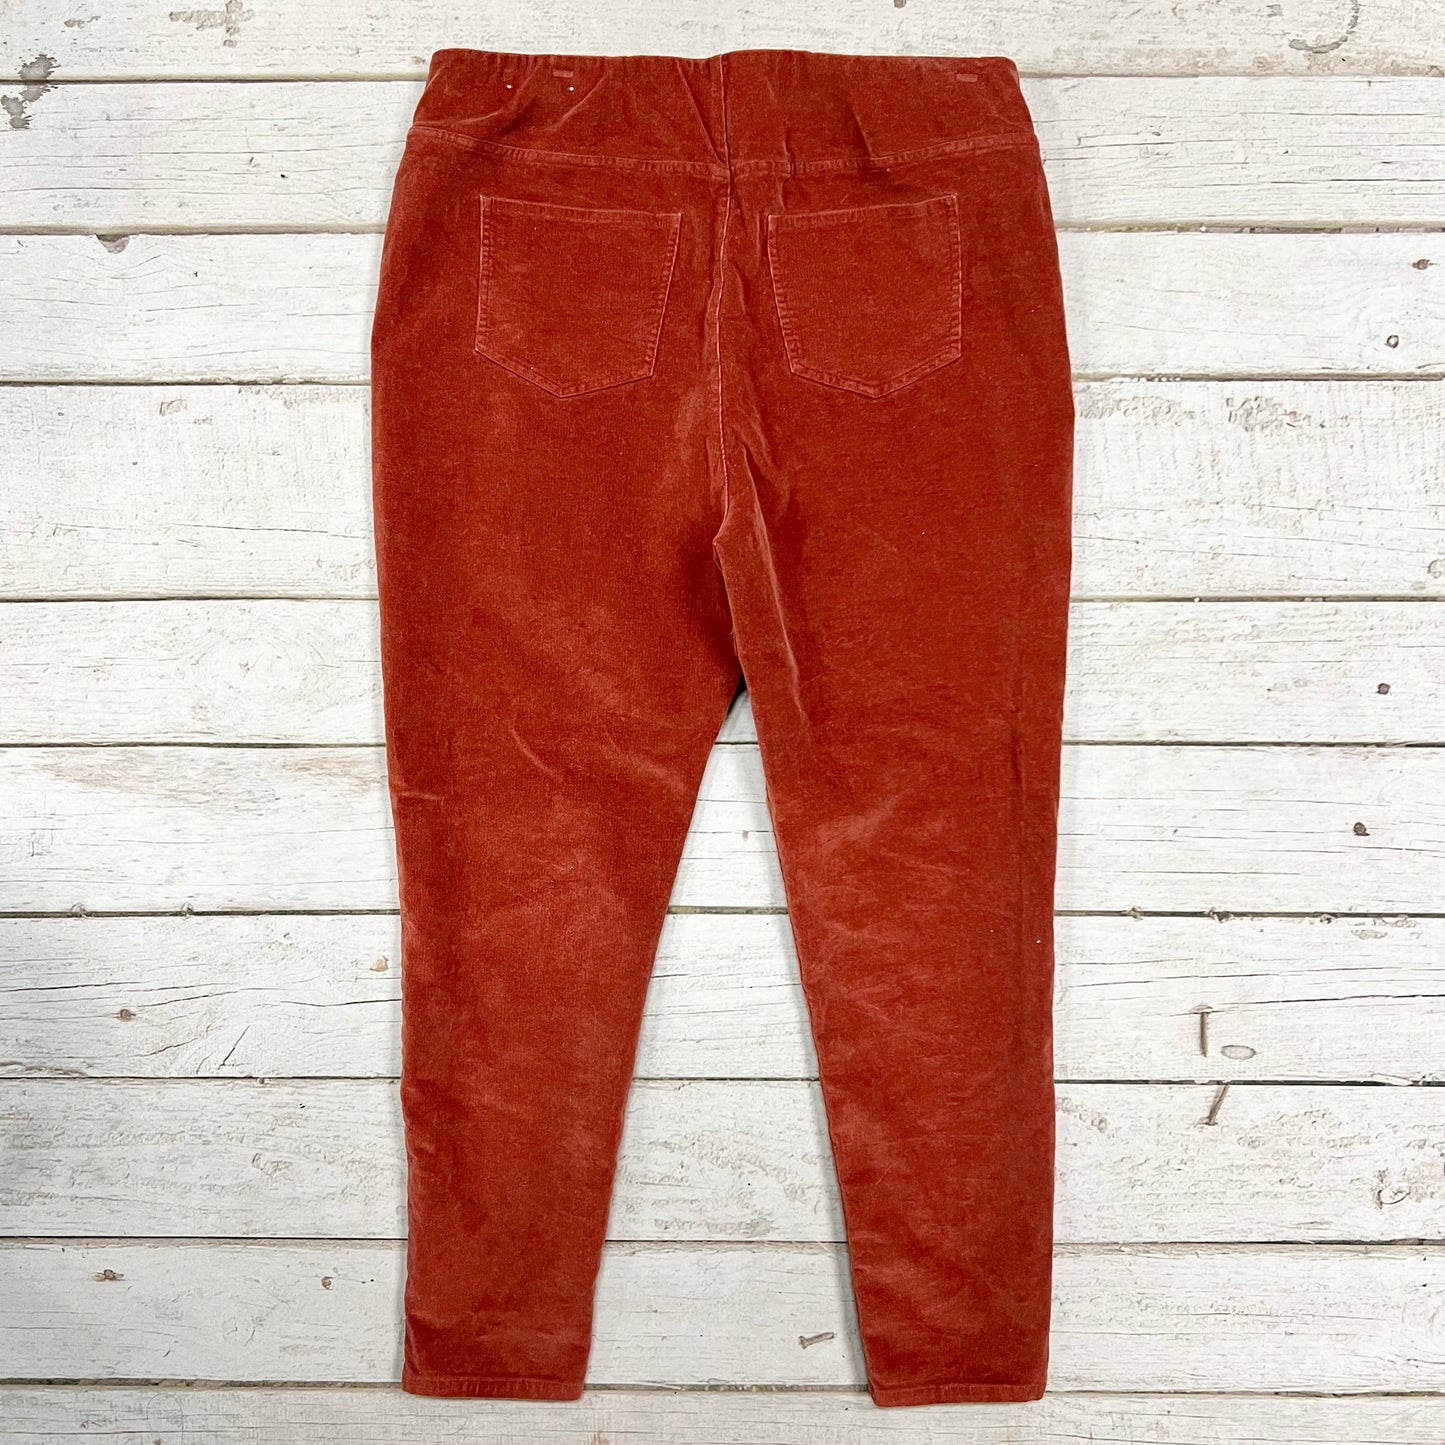 Pants Designer By Soft Surroundings  Size: Xl